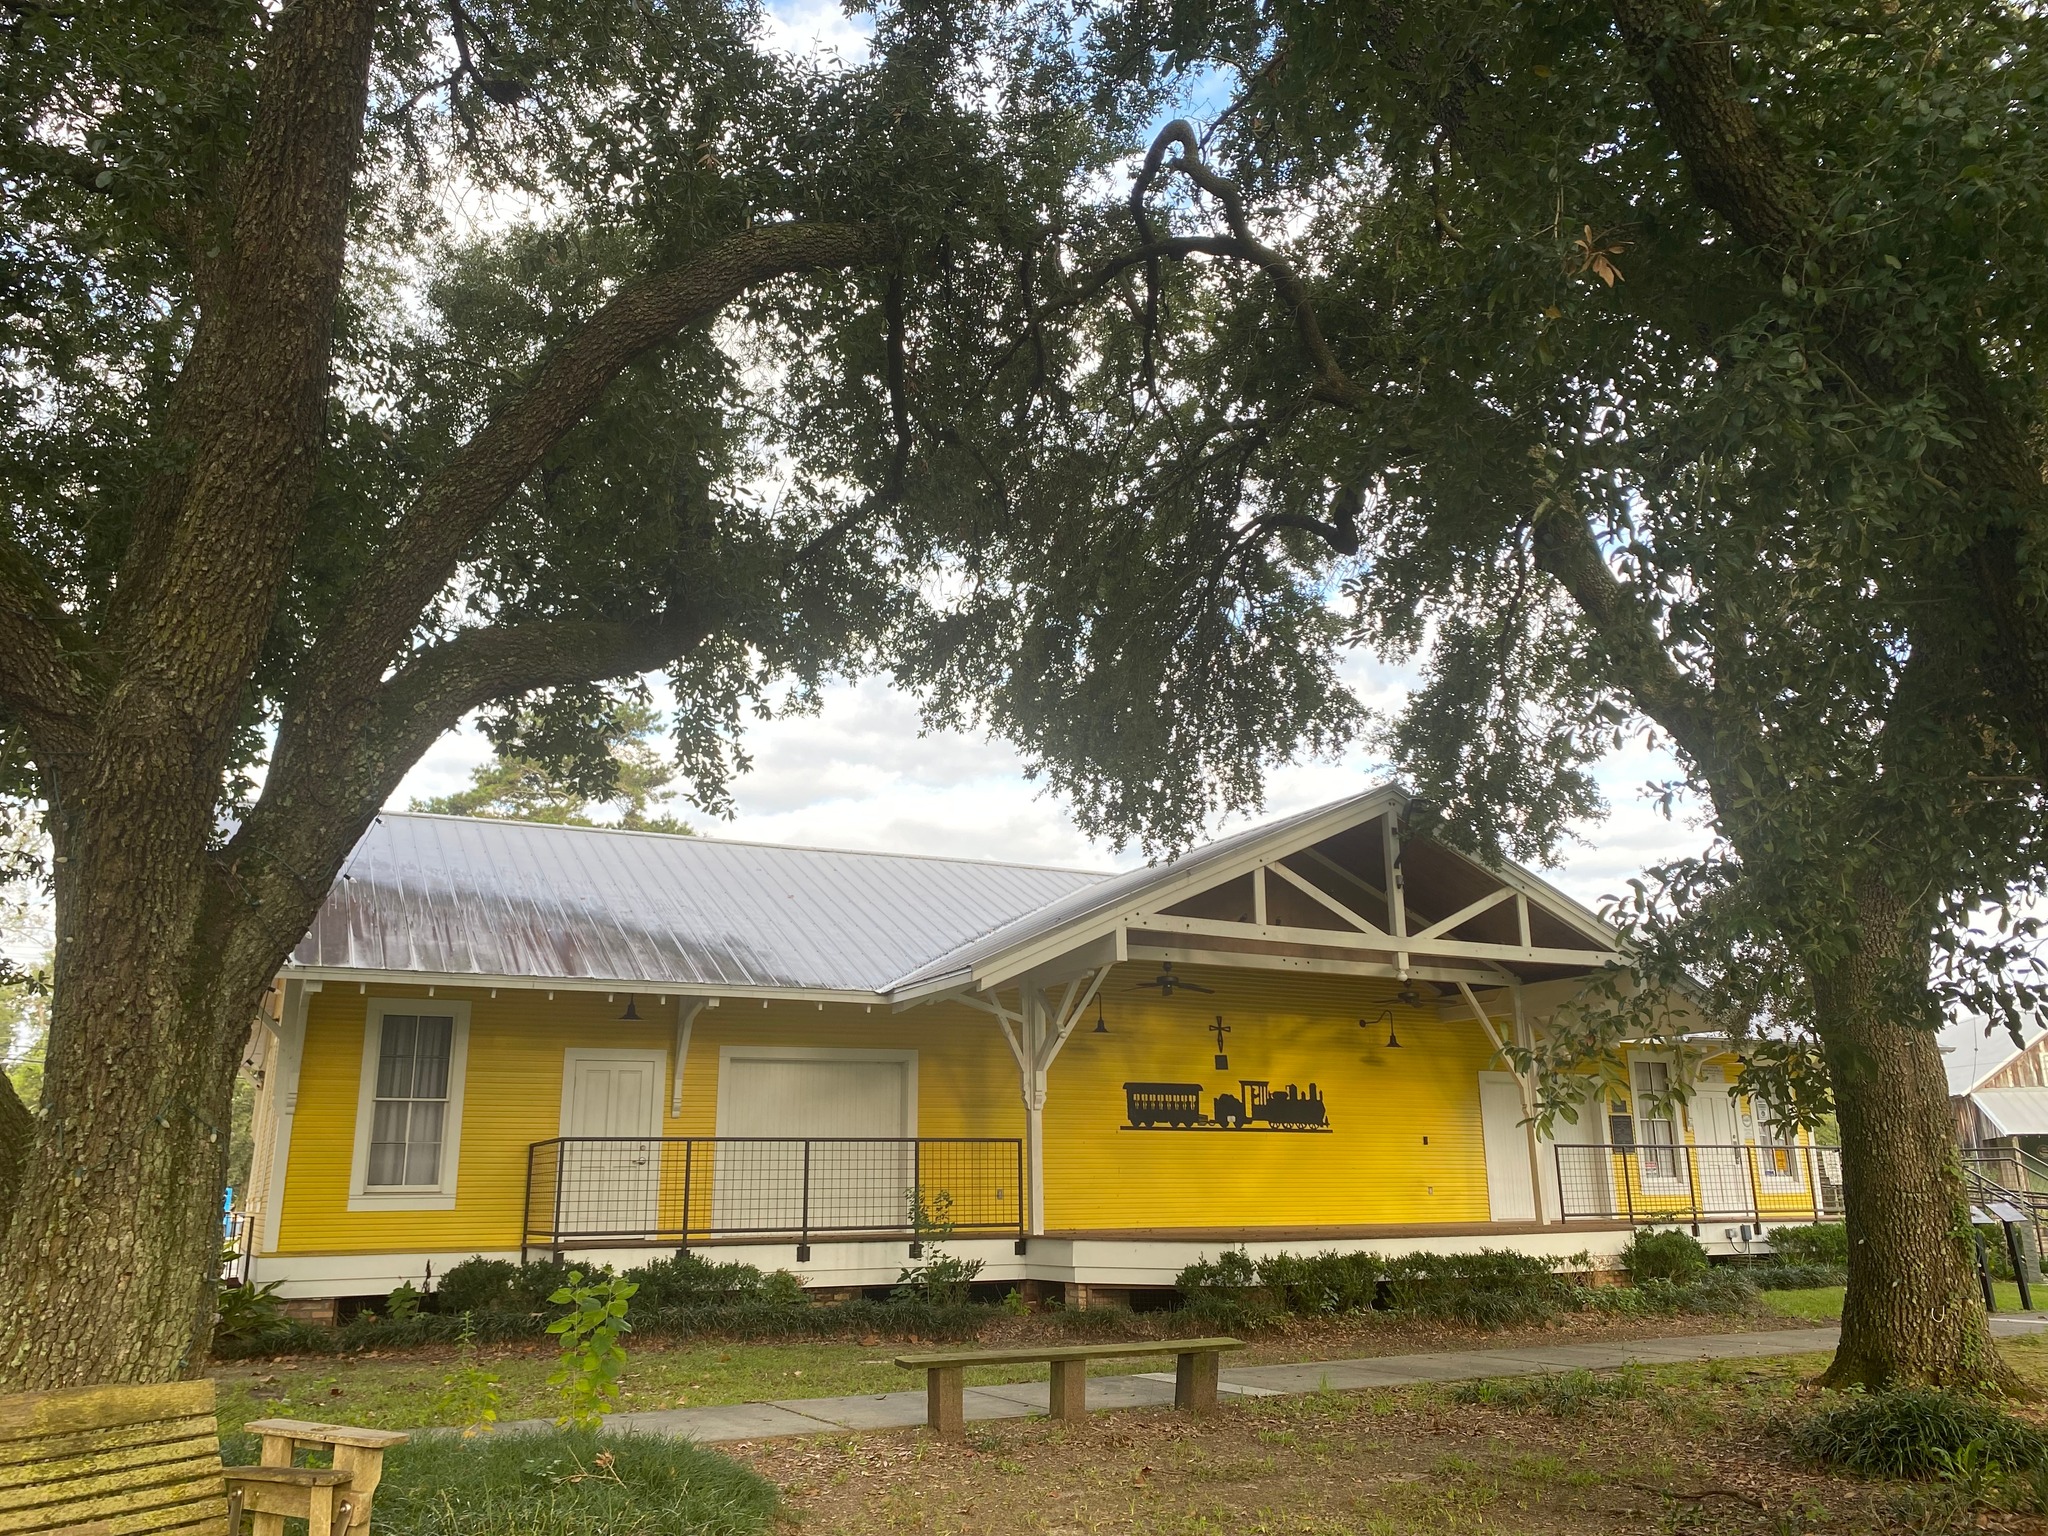 Louisiana Orphan Train Museum "Open House Gathering"